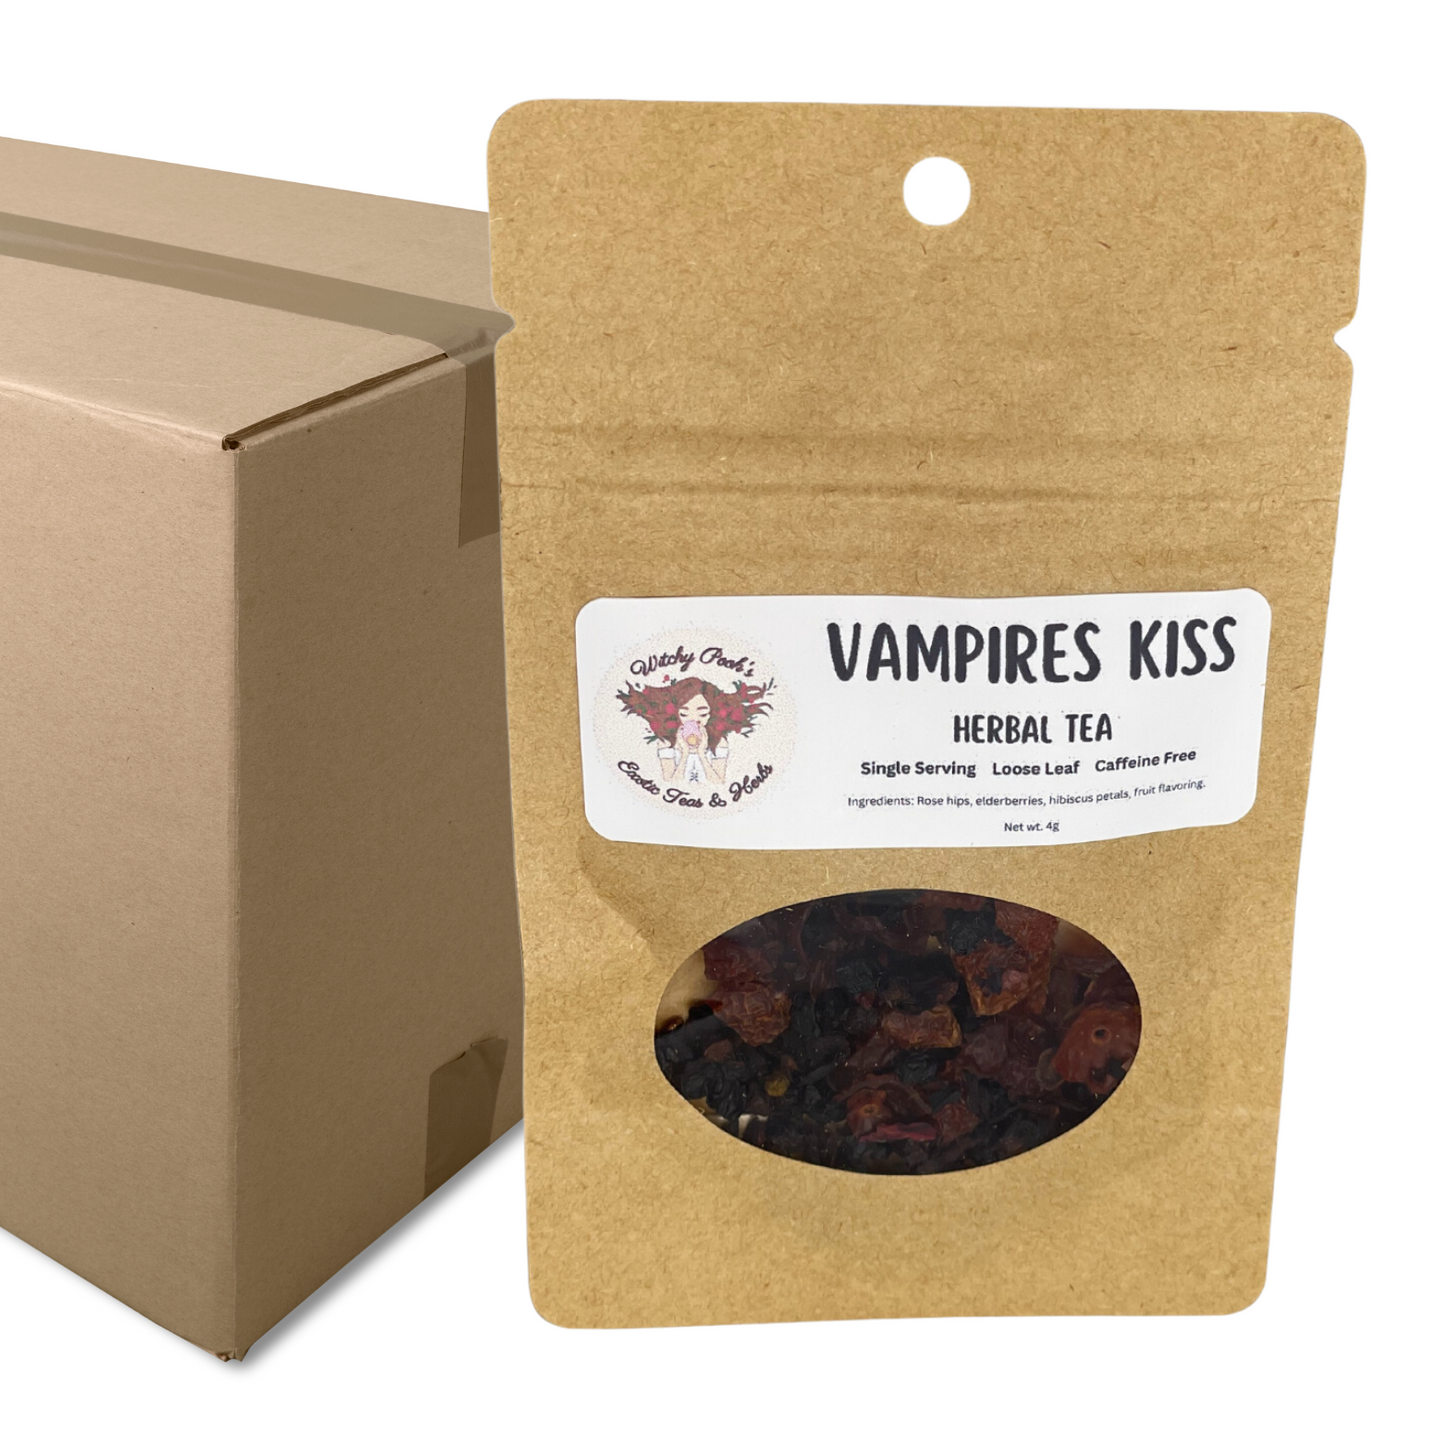 Witchy Pooh's Vampire's Kiss Loose Leaf Elderberry Fruit Herbal Tea, Caffeine Free